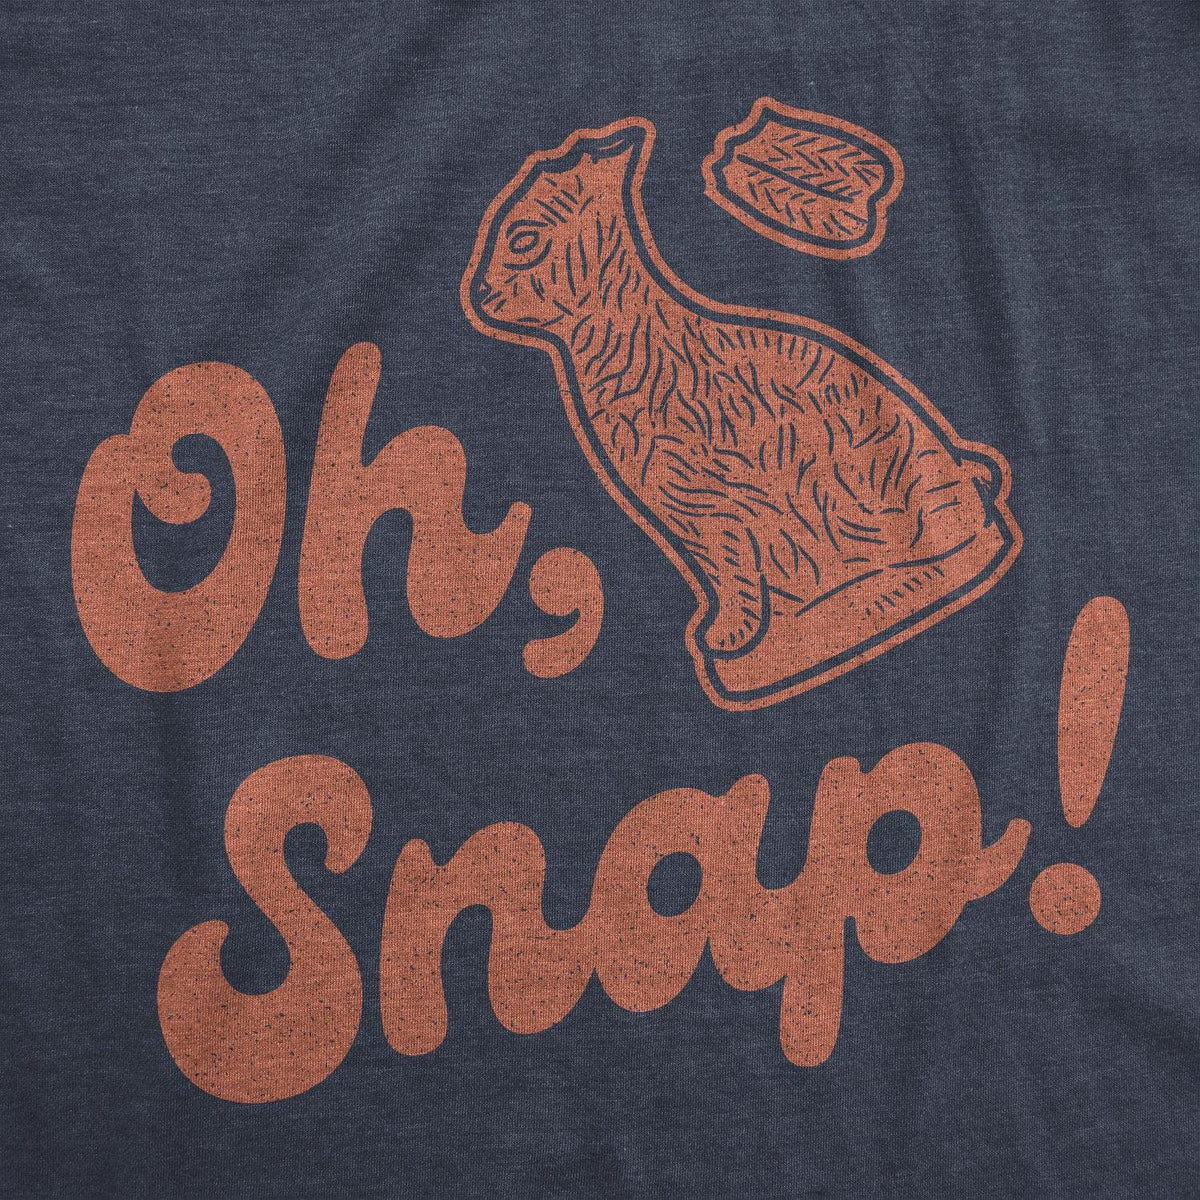 Oh Snap Easter Men&#39;s Tshirt  -  Crazy Dog T-Shirts